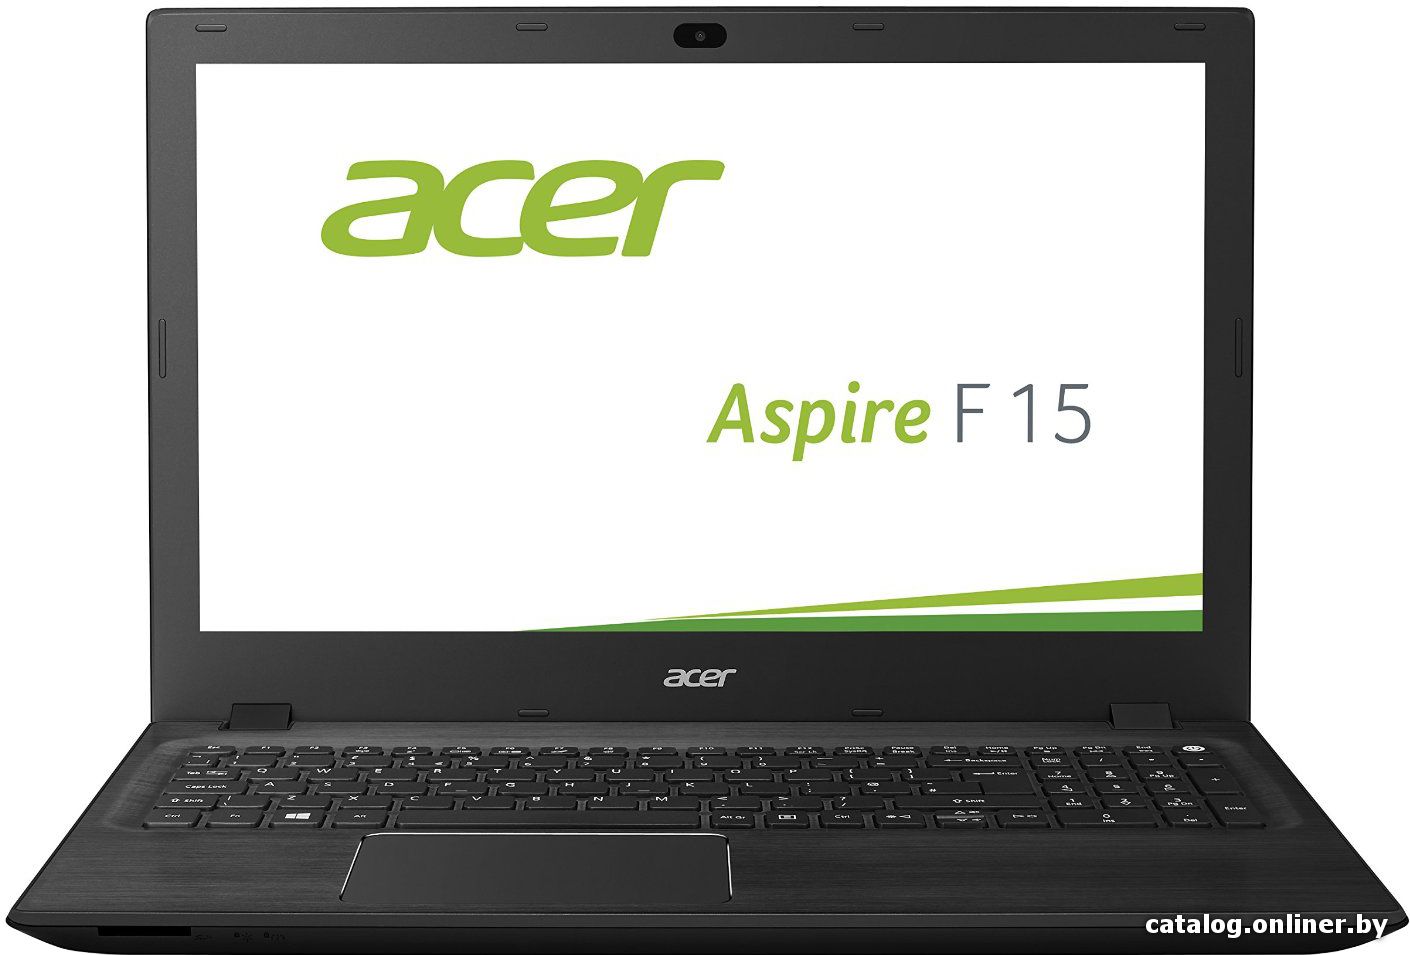 Замена оперативной памяти Acer Aspire F15 F5-571G-587M